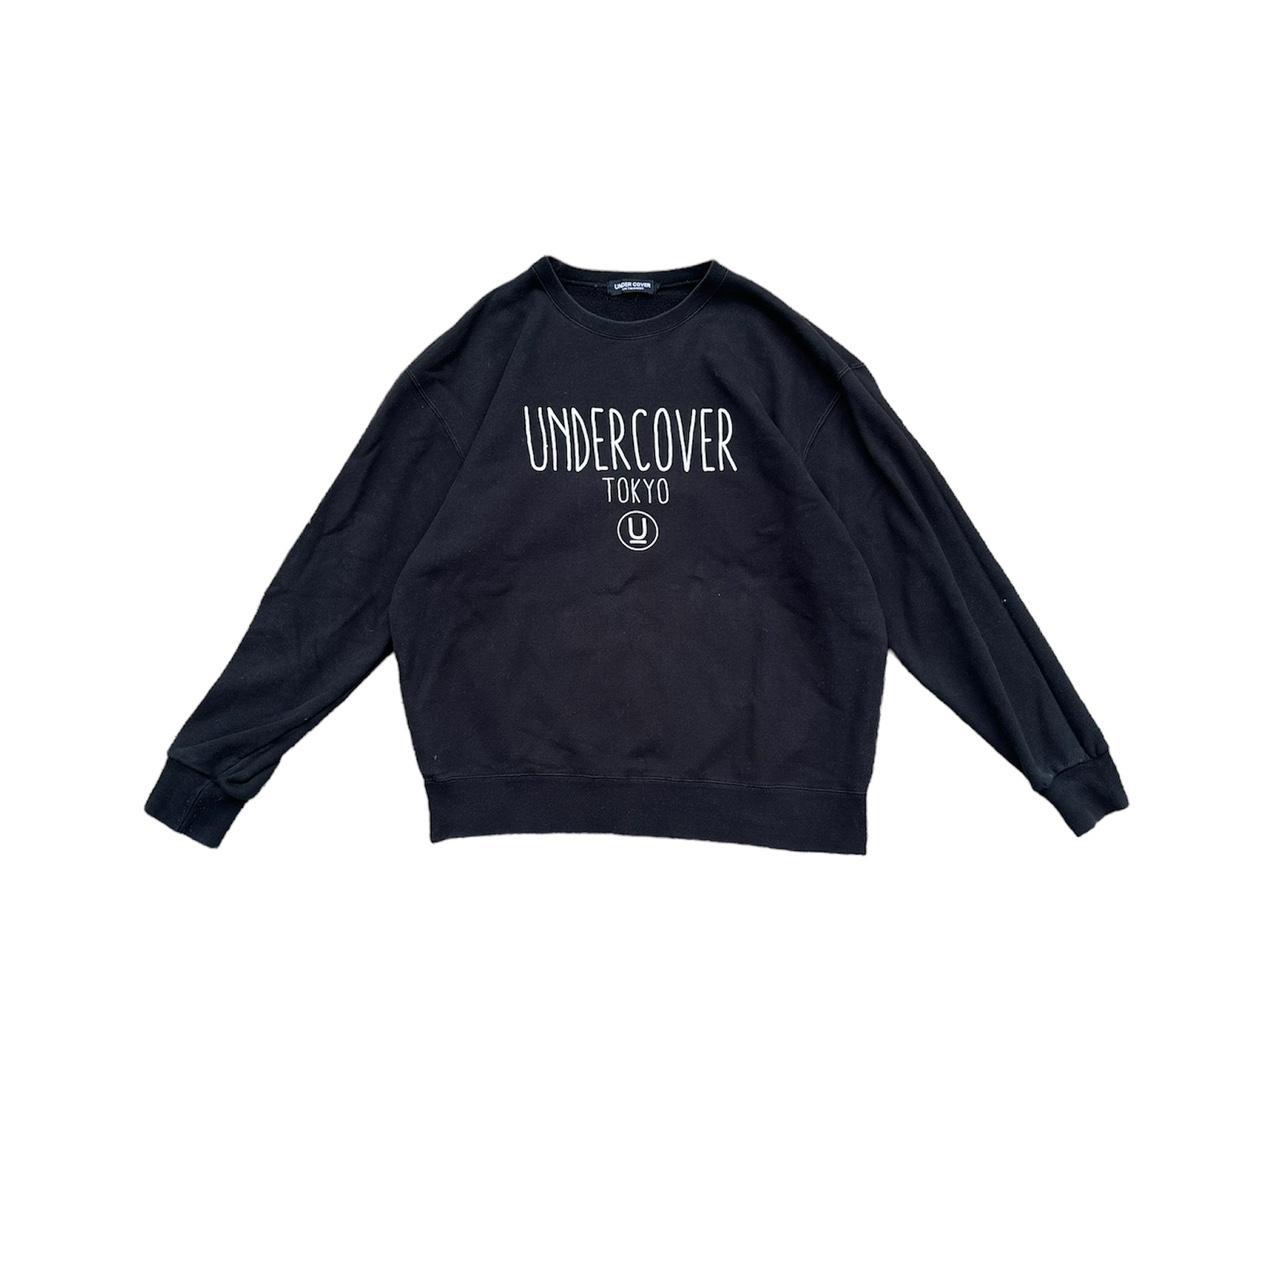 Undercover Jun Takahashi sweatshirt. Undercover